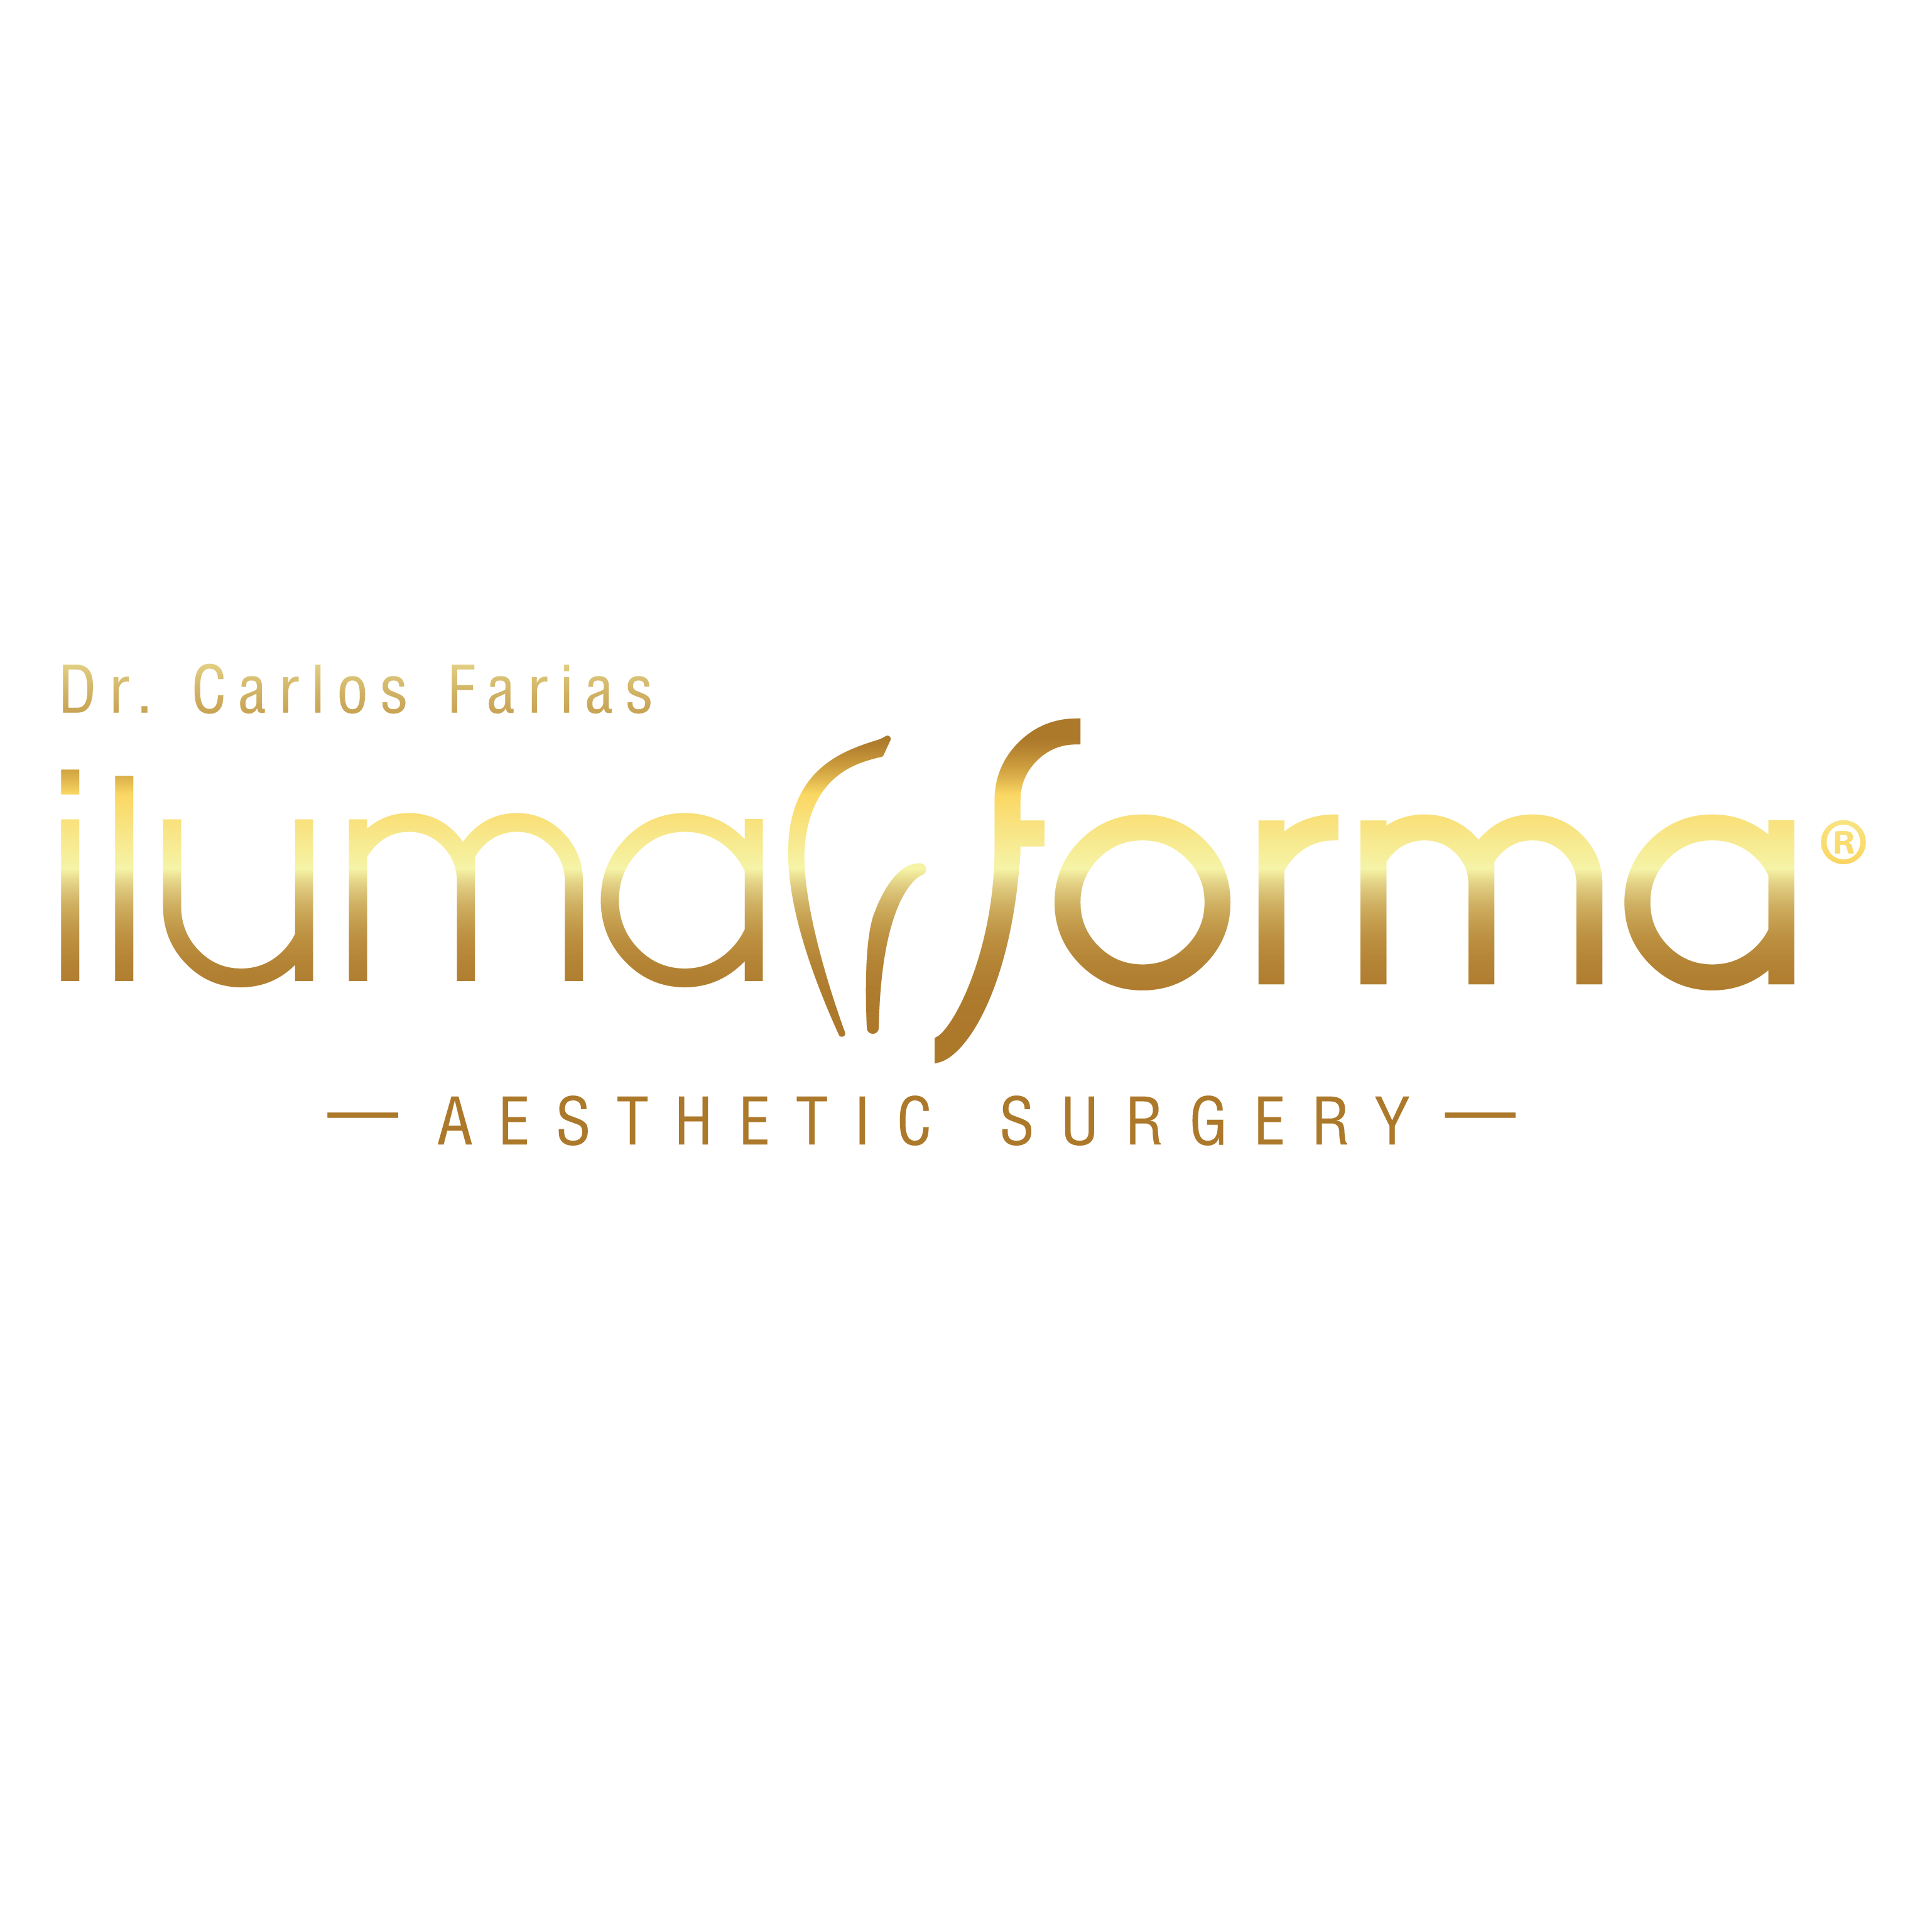 Ilumaforma Aesthetic Surgery Logo